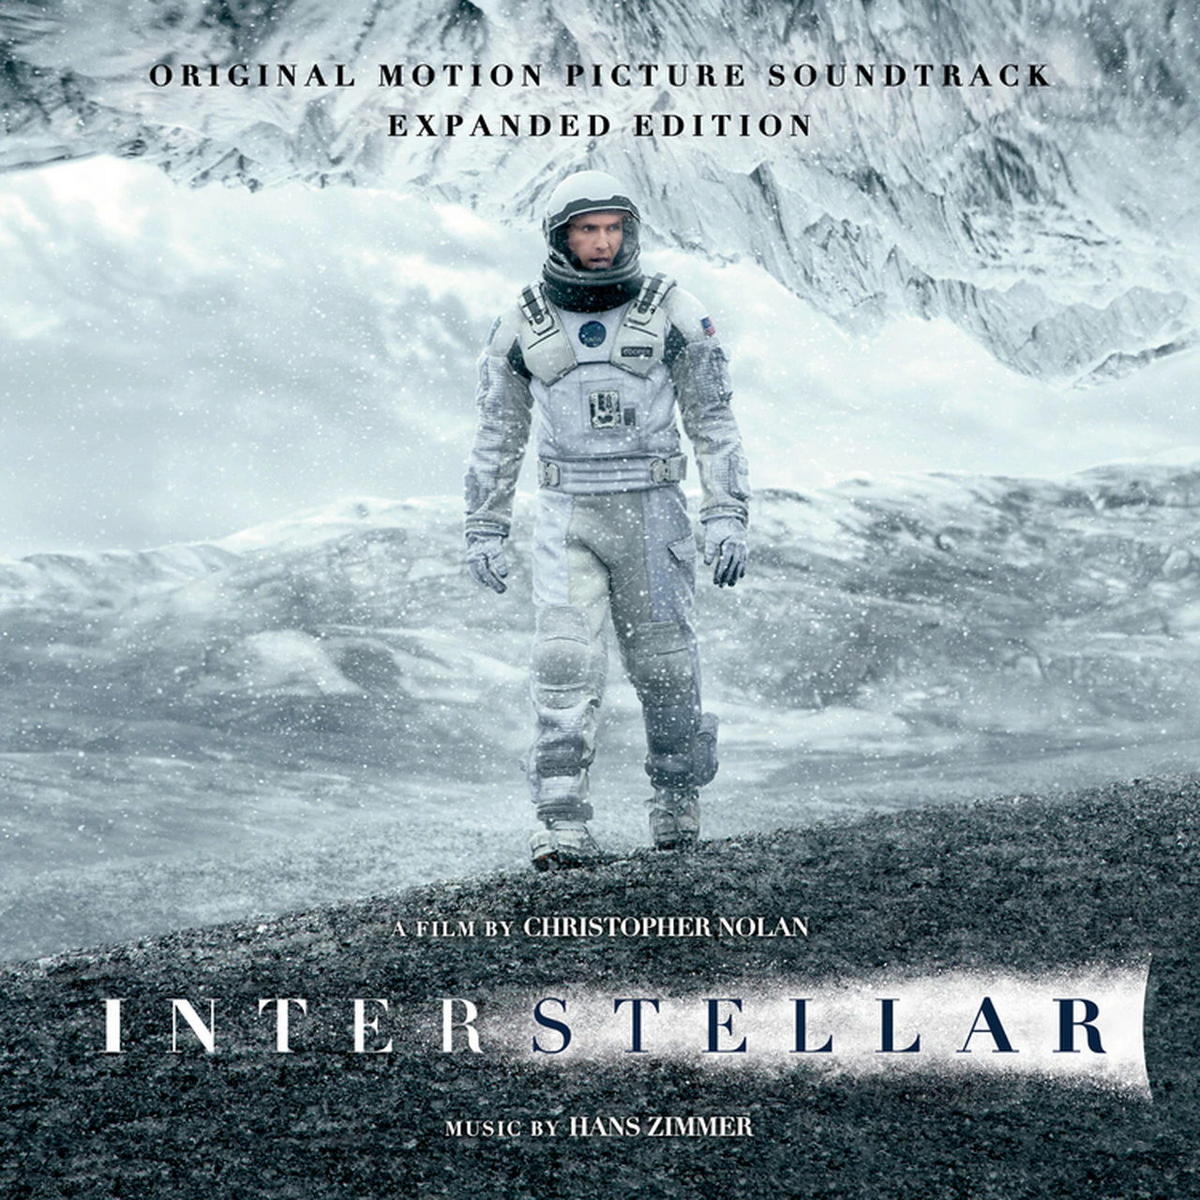 Саундтрек Sony Hans Zimmer - Interstellar (Original Motion Picture Soundtrack) (4LP/Expanded Edition) саундтрек sony hans zimmer interstellar original motion picture soundtrack 4lp expanded edition